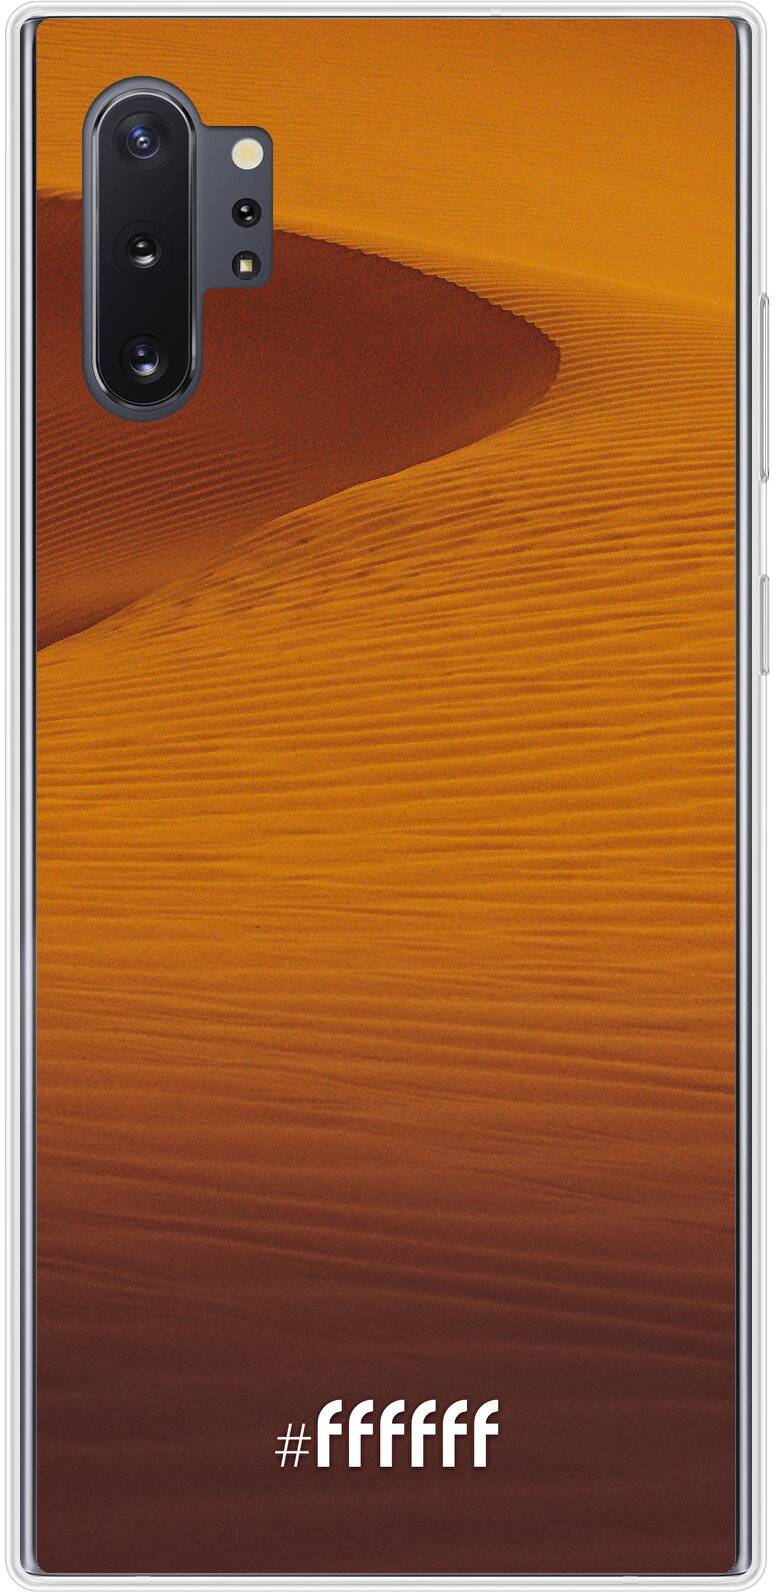 Sand Dunes Galaxy Note 10 Plus